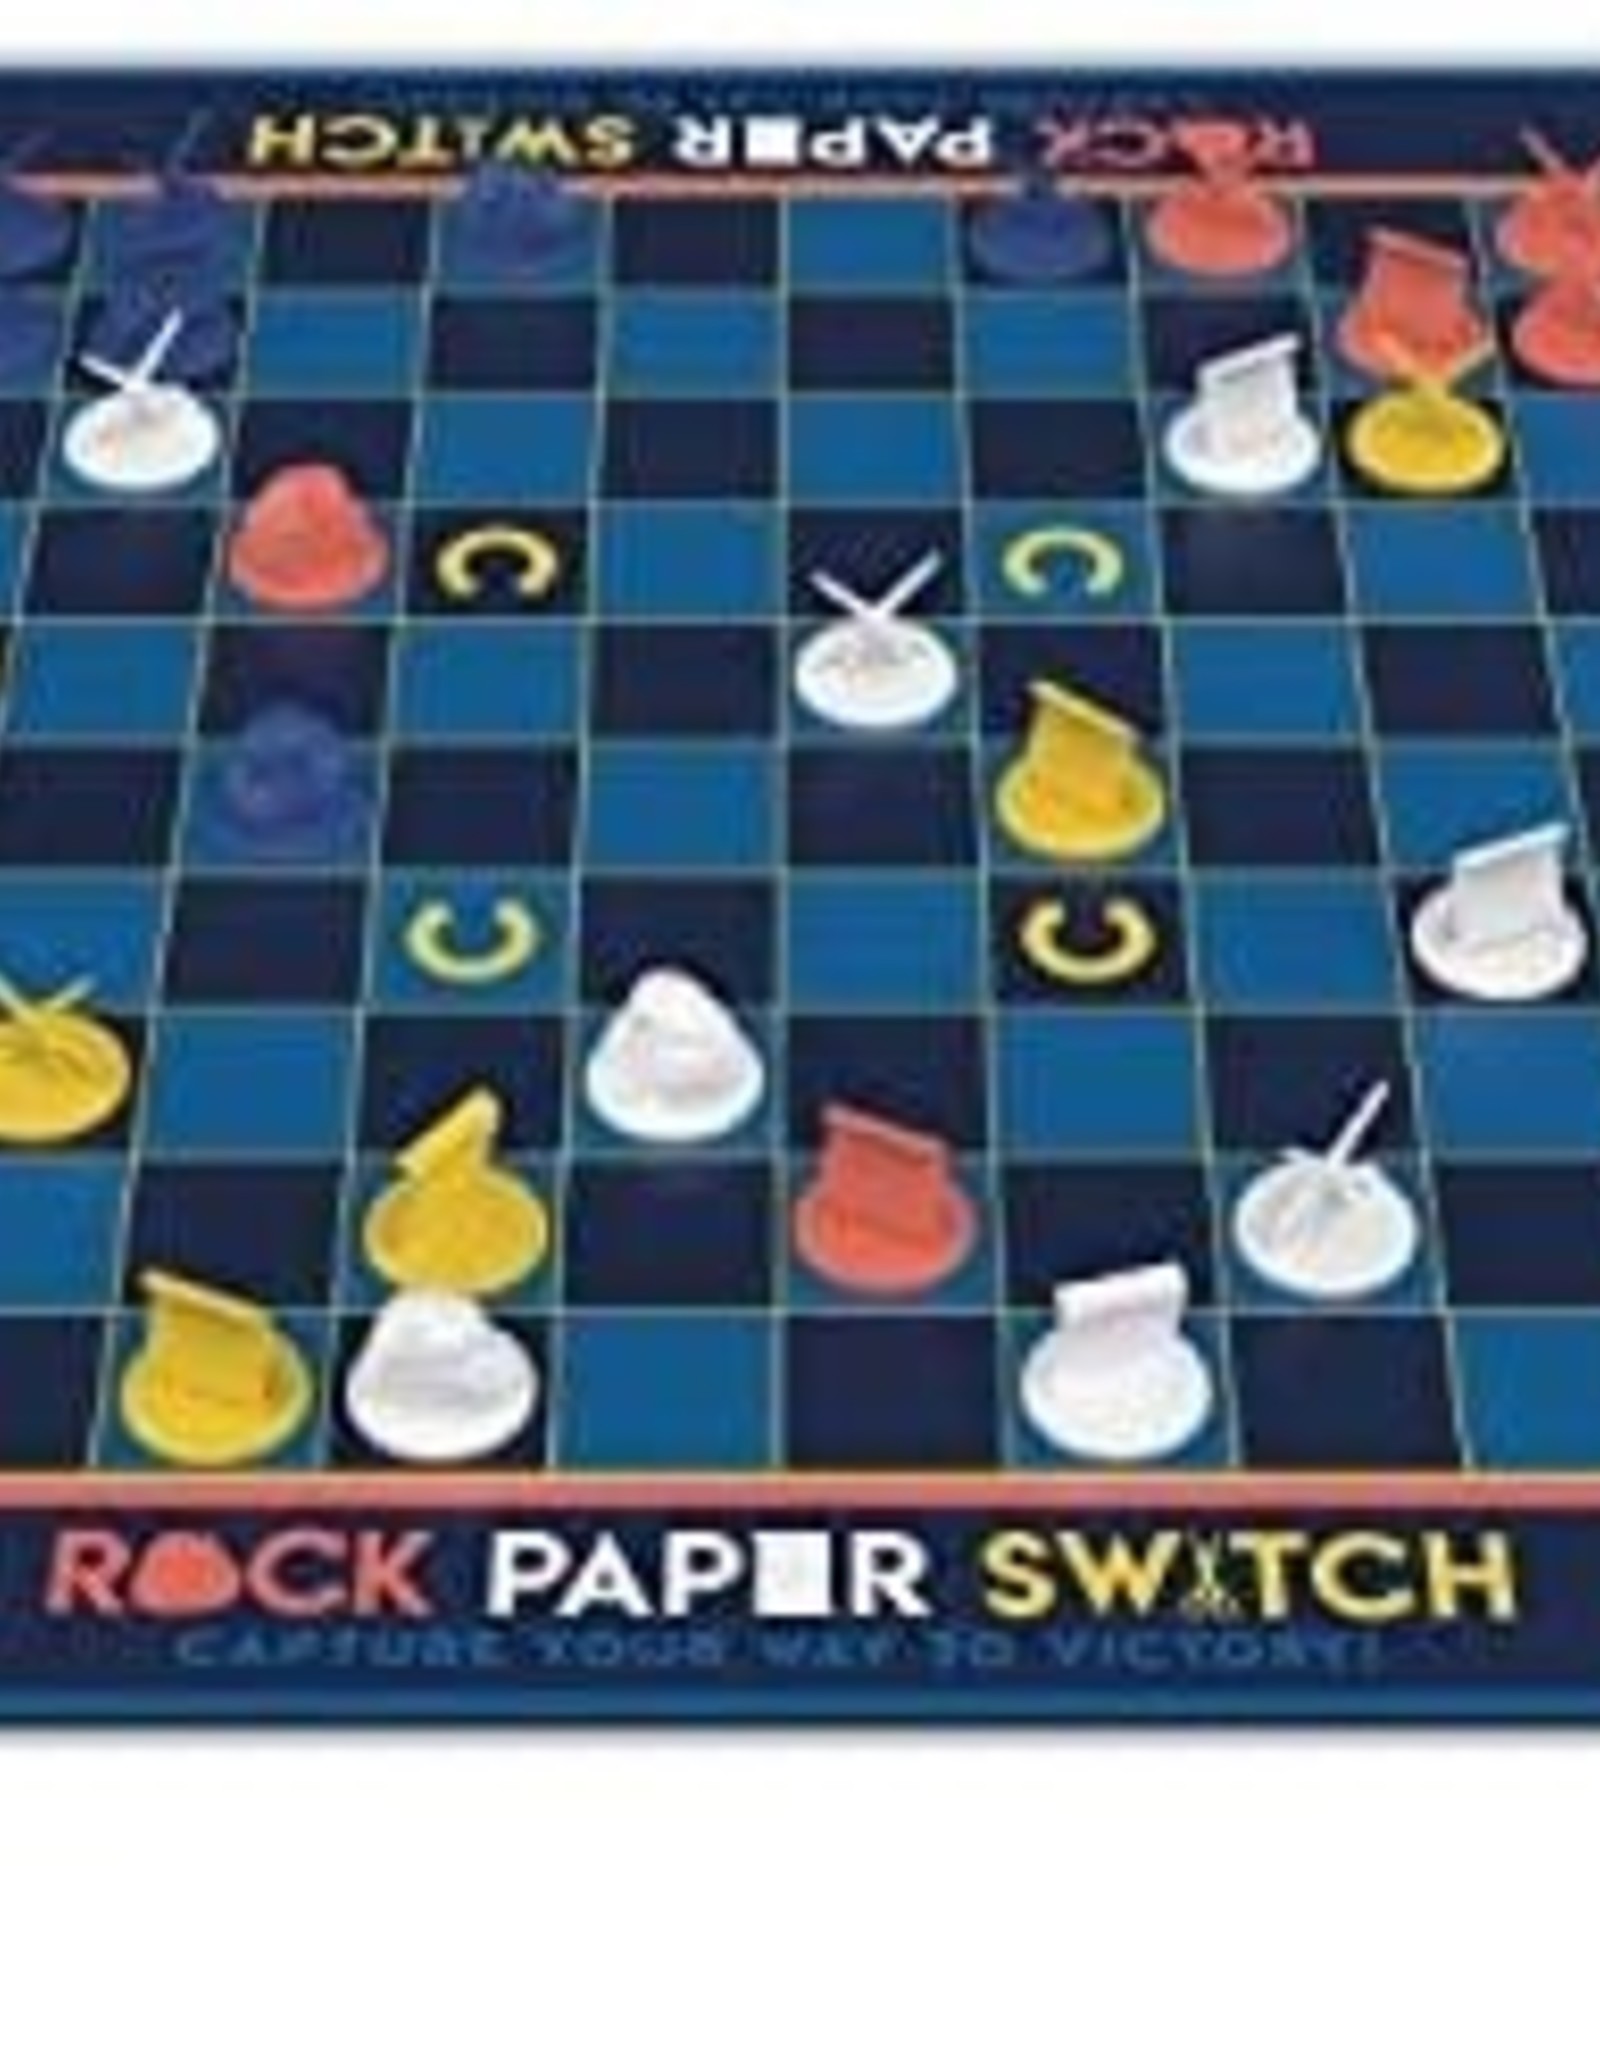 Rock, Paper, Switch